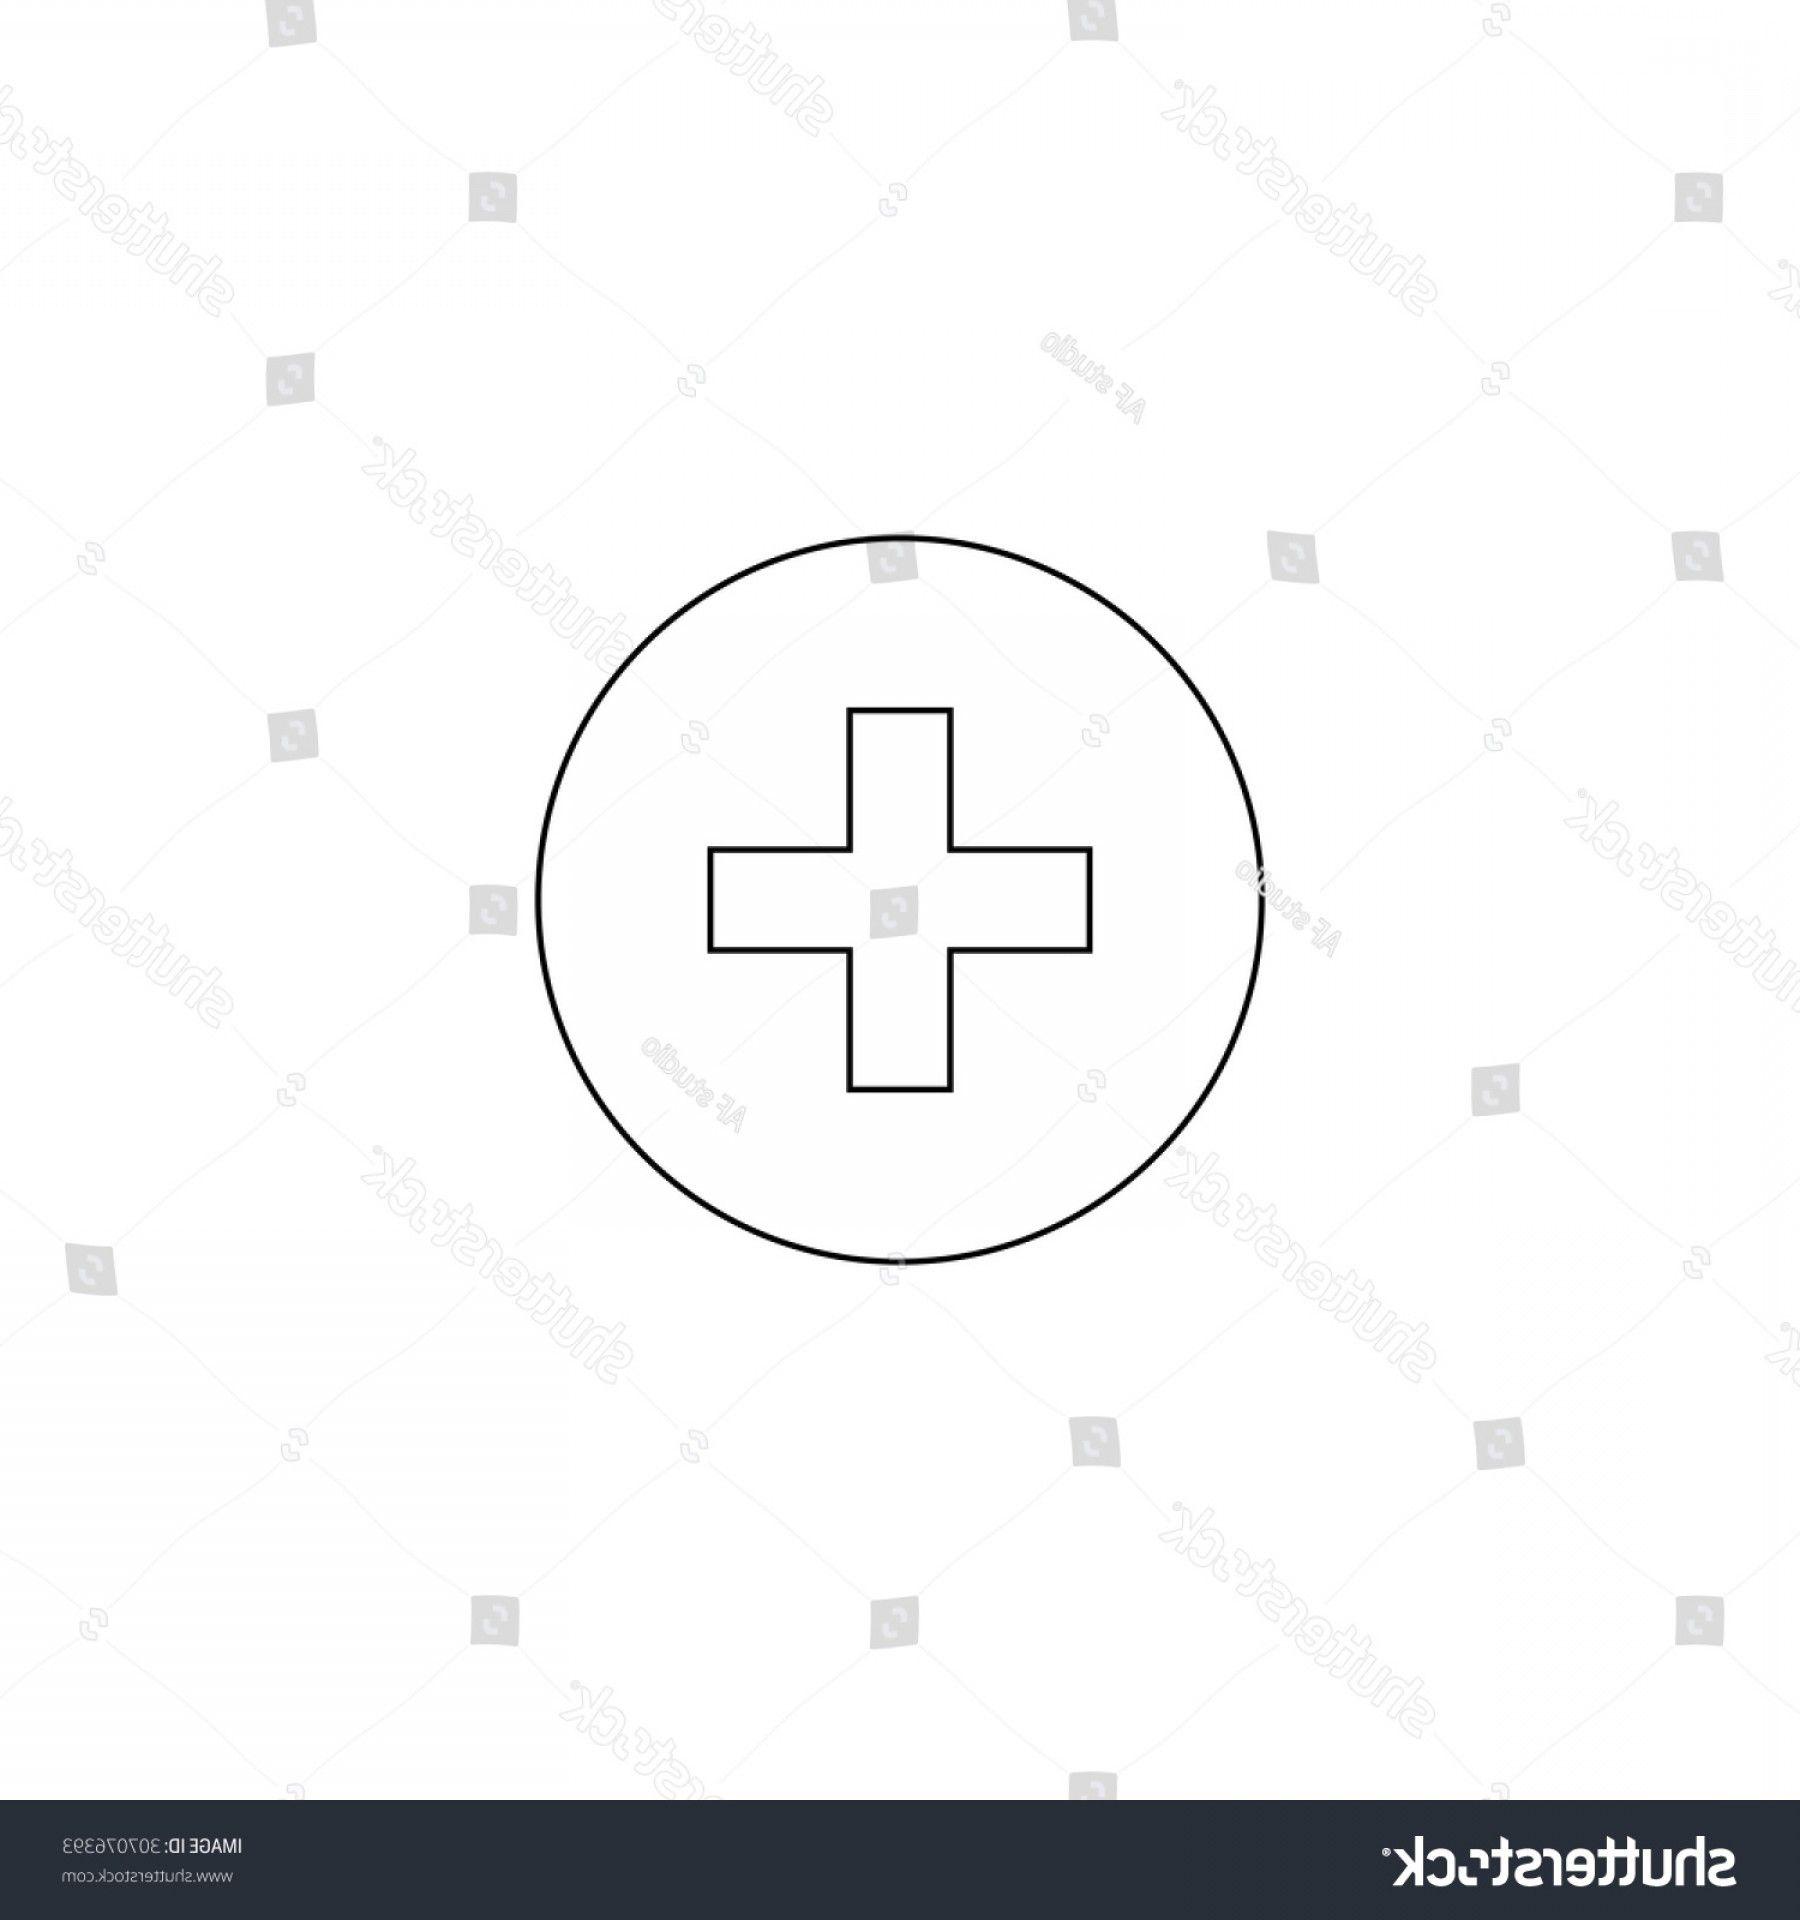 Black Medical Cross Logo - Medical Cross Vector.com. Free for personal use